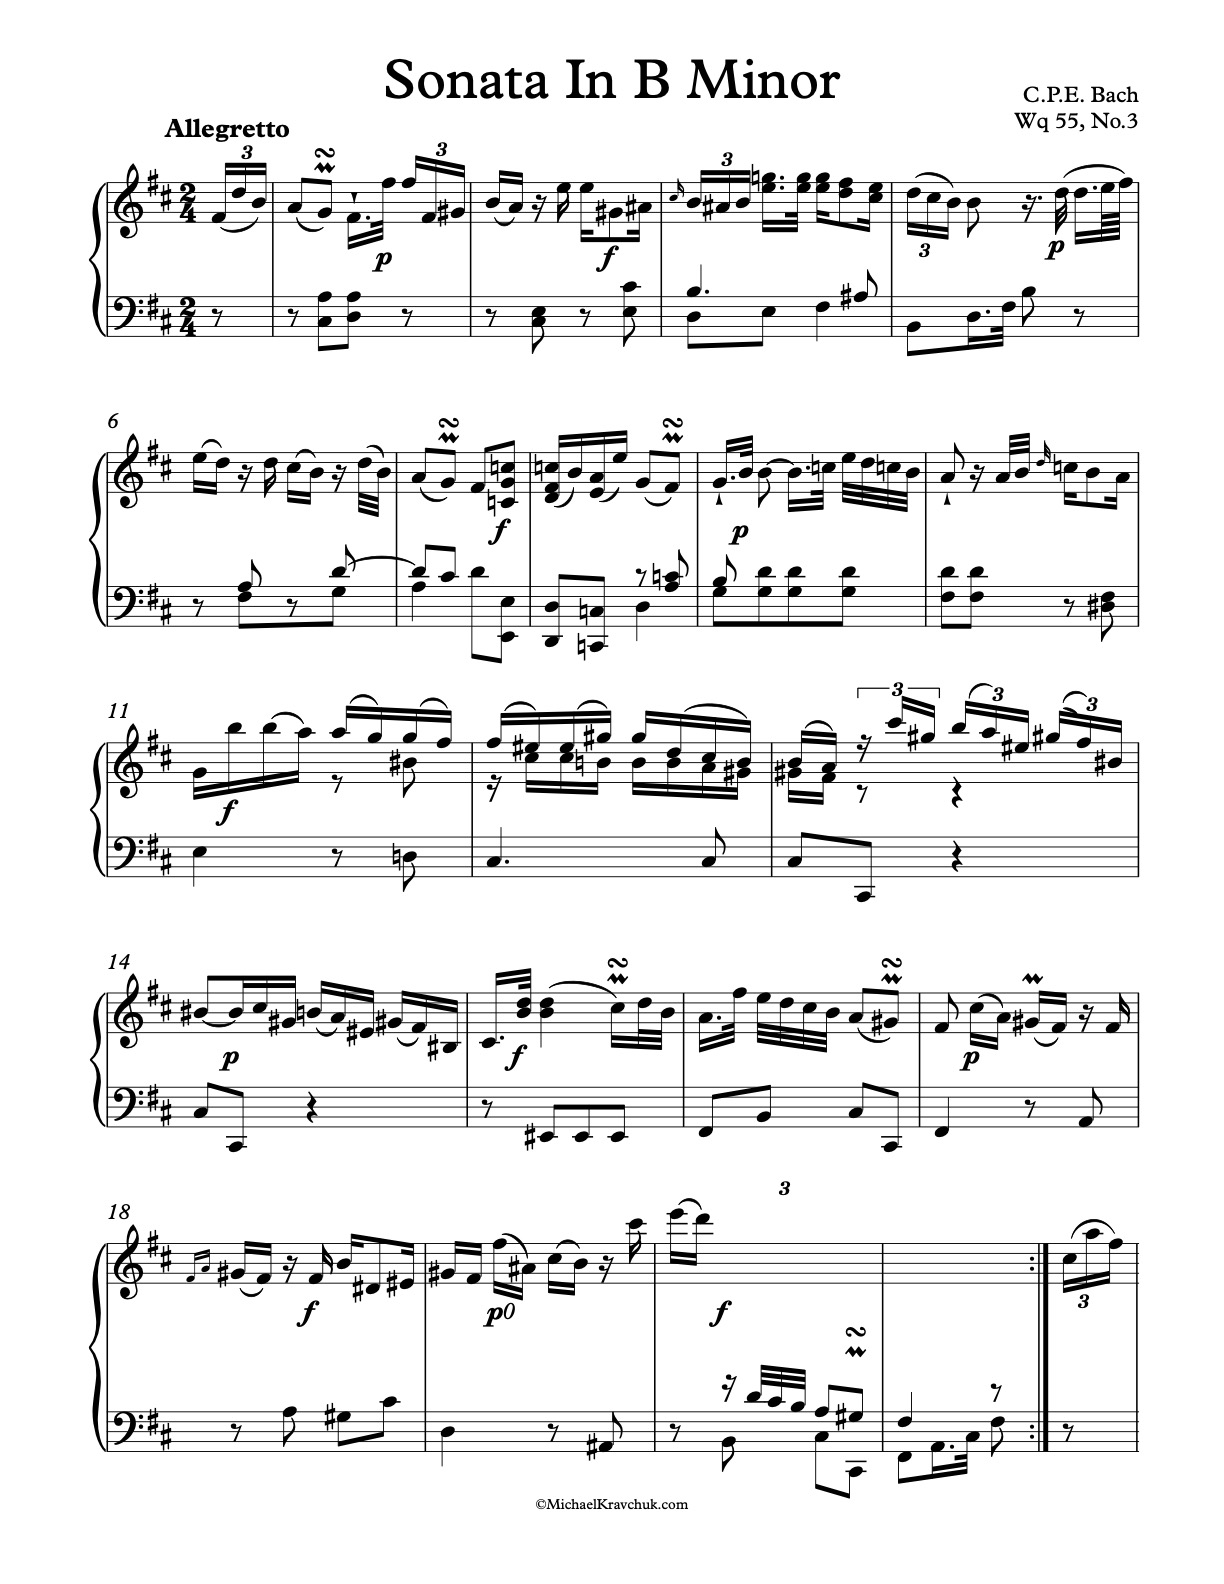 Sonata in B Minor - Wq 55, No. 3 Piano Sheet Music